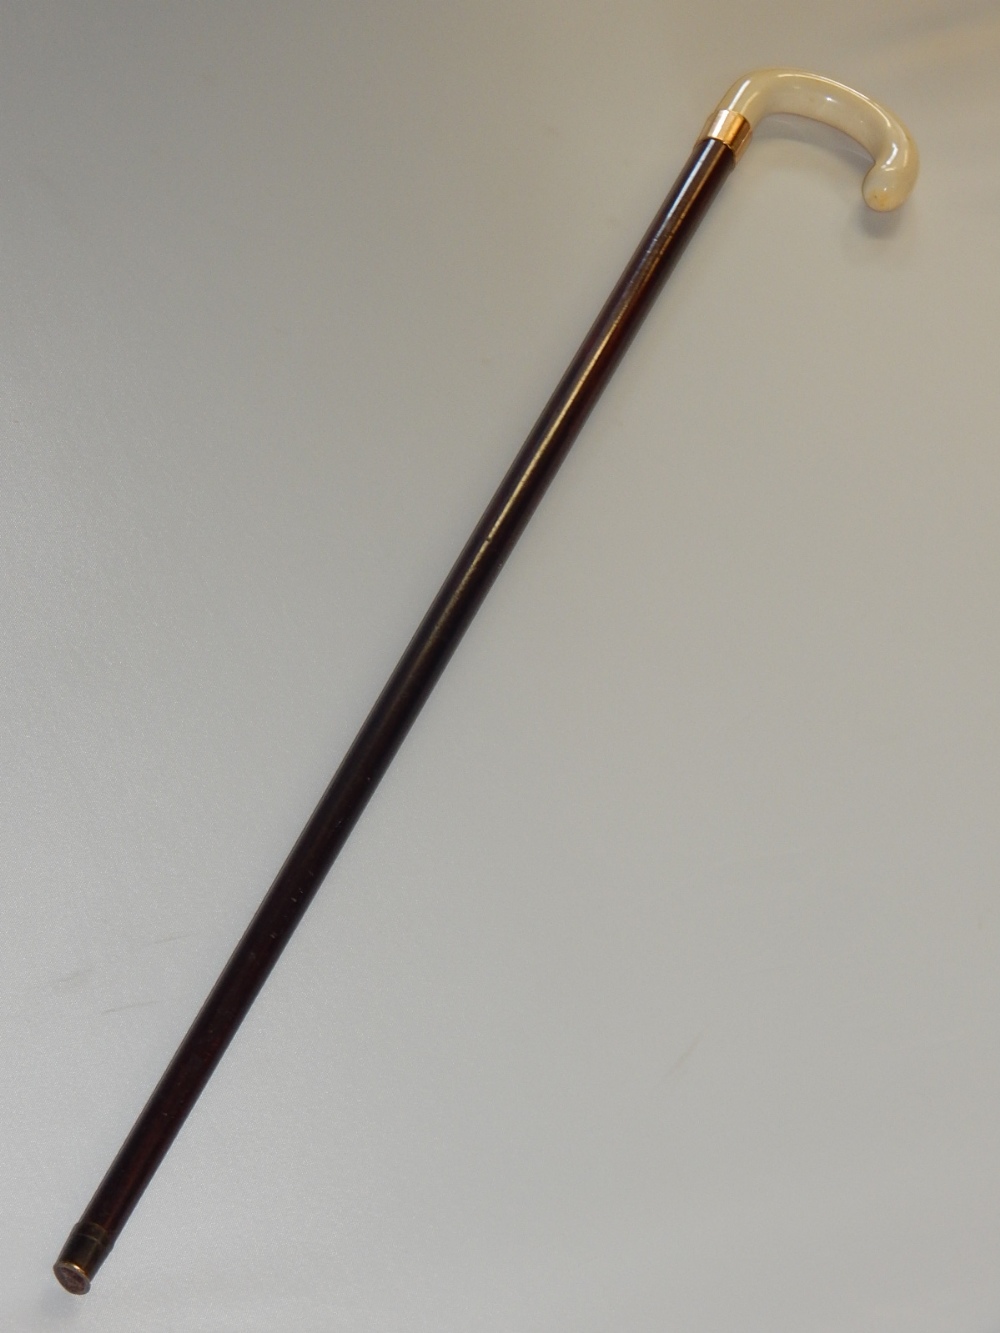 A Victorian / Edwardian gold mounted ivory handled rosewood walking stick. - Image 2 of 3